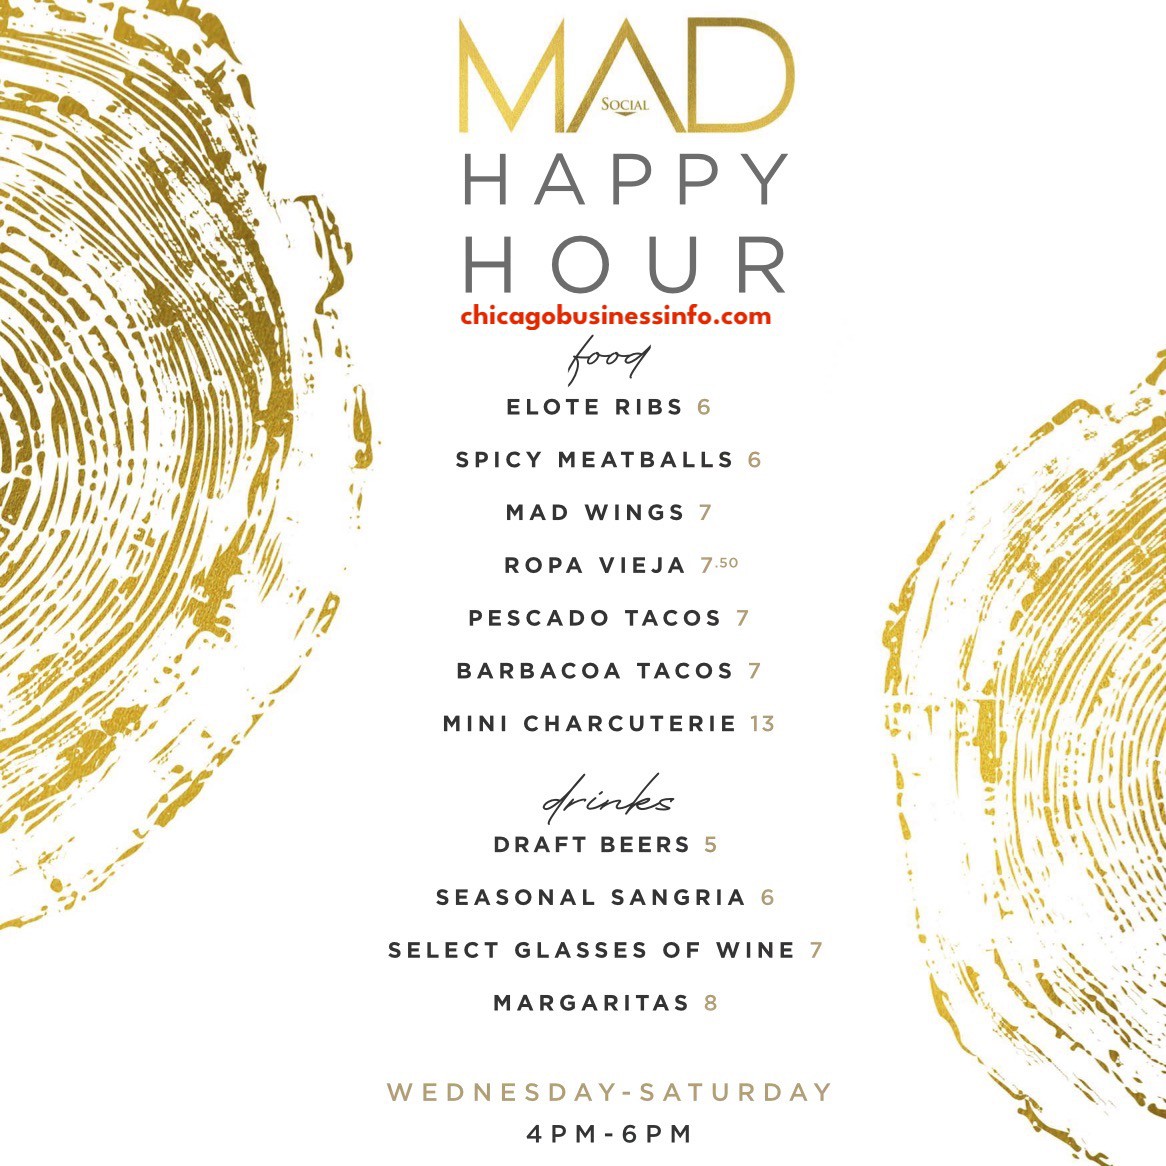 Mad social chicago happy hour menu